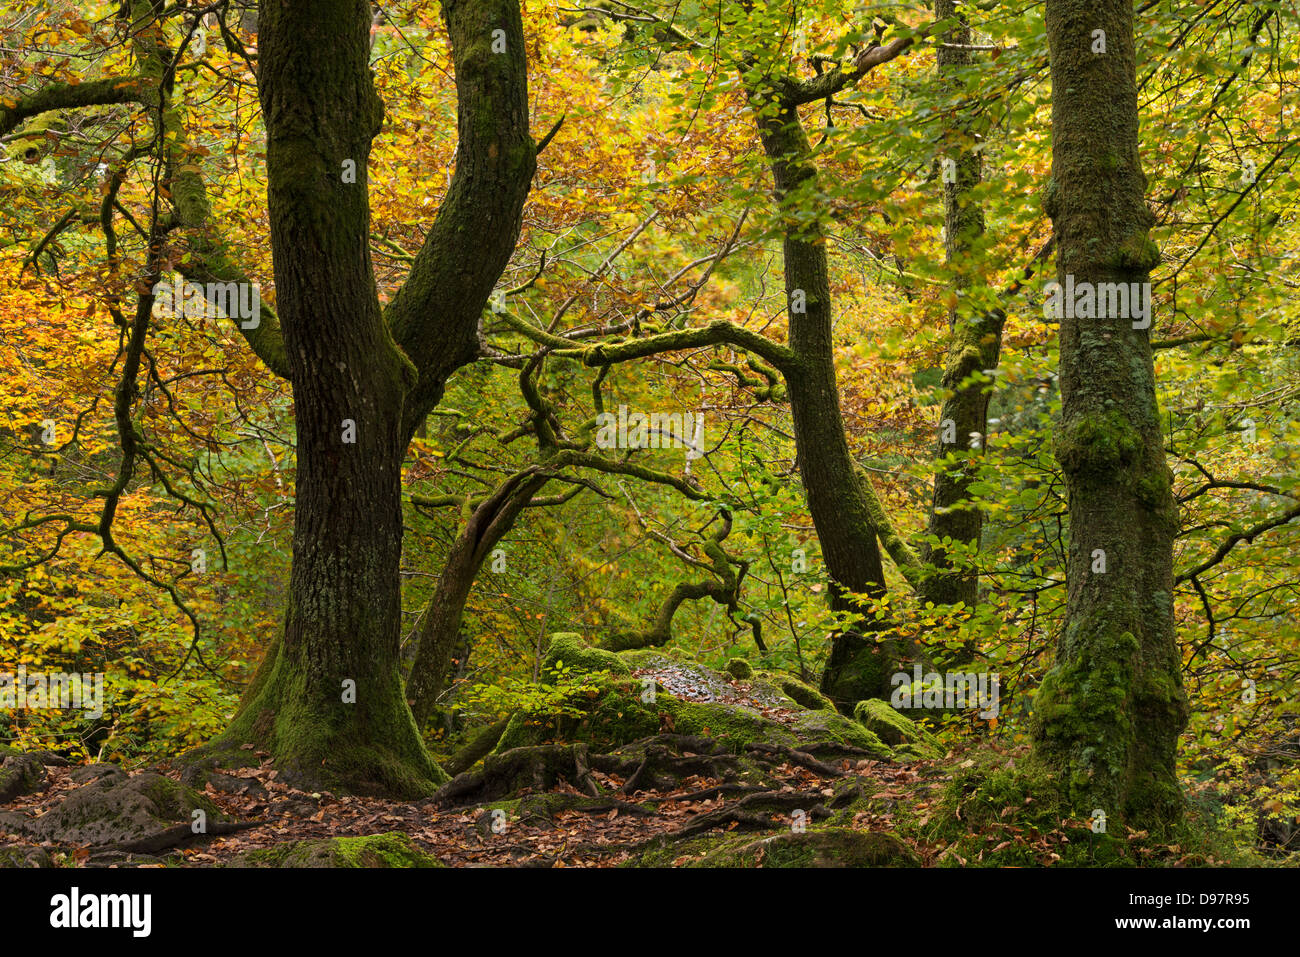 Broadleaf woodland with colourful autumn foliage, Ambleside, Lake District, Cumbria, England. Autumn (October) 2012. Stock Photo